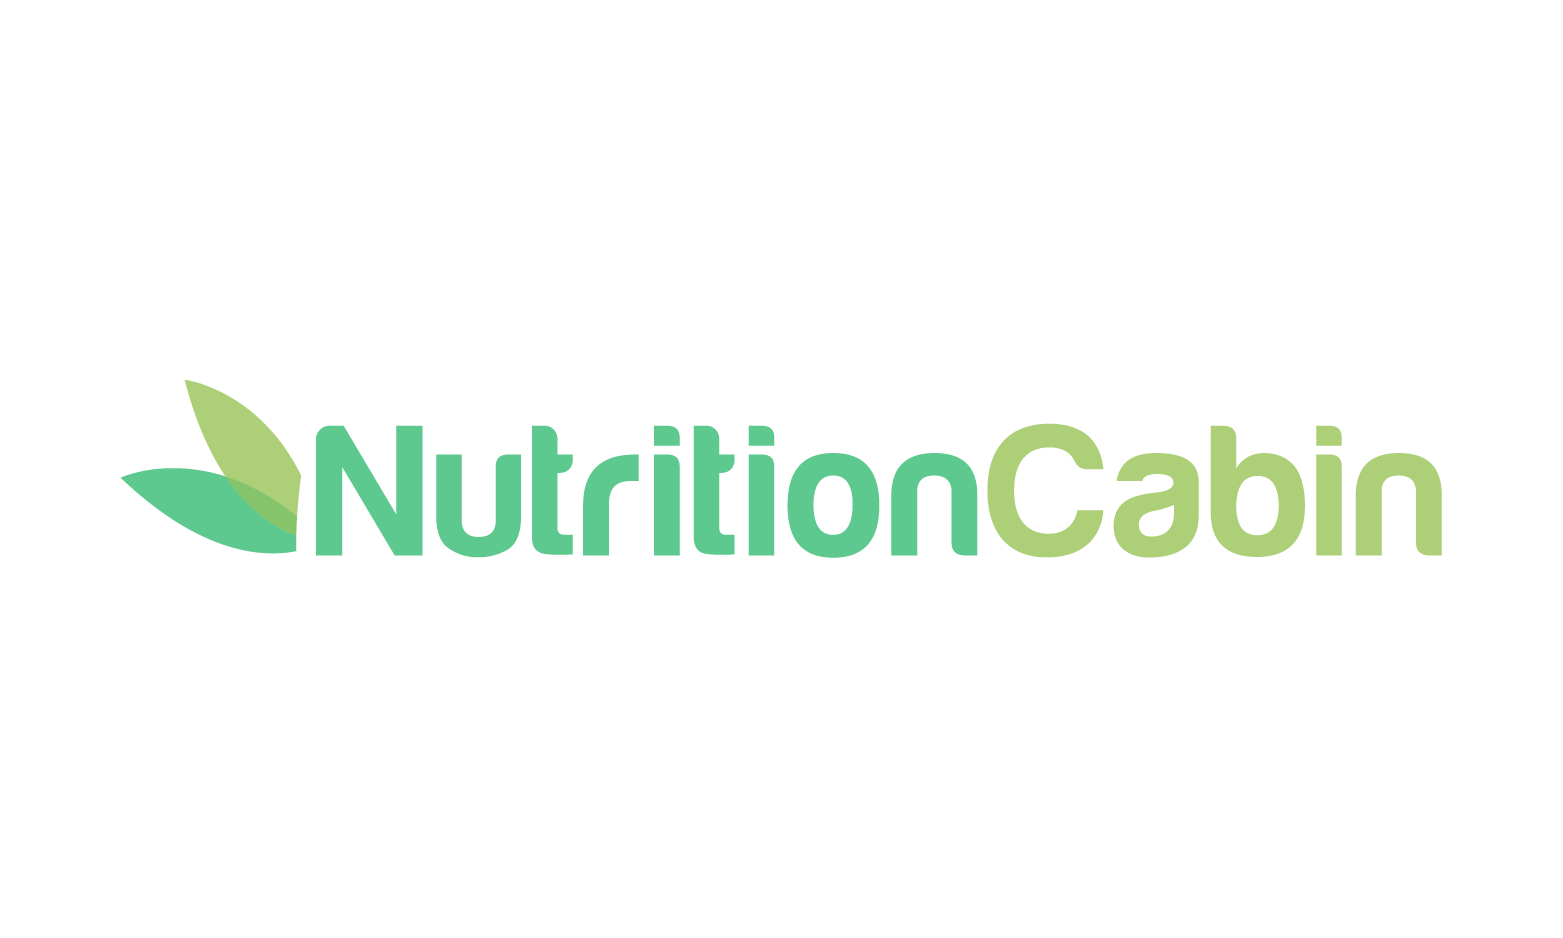 NutritionCabin.com - Creative brandable domain for sale